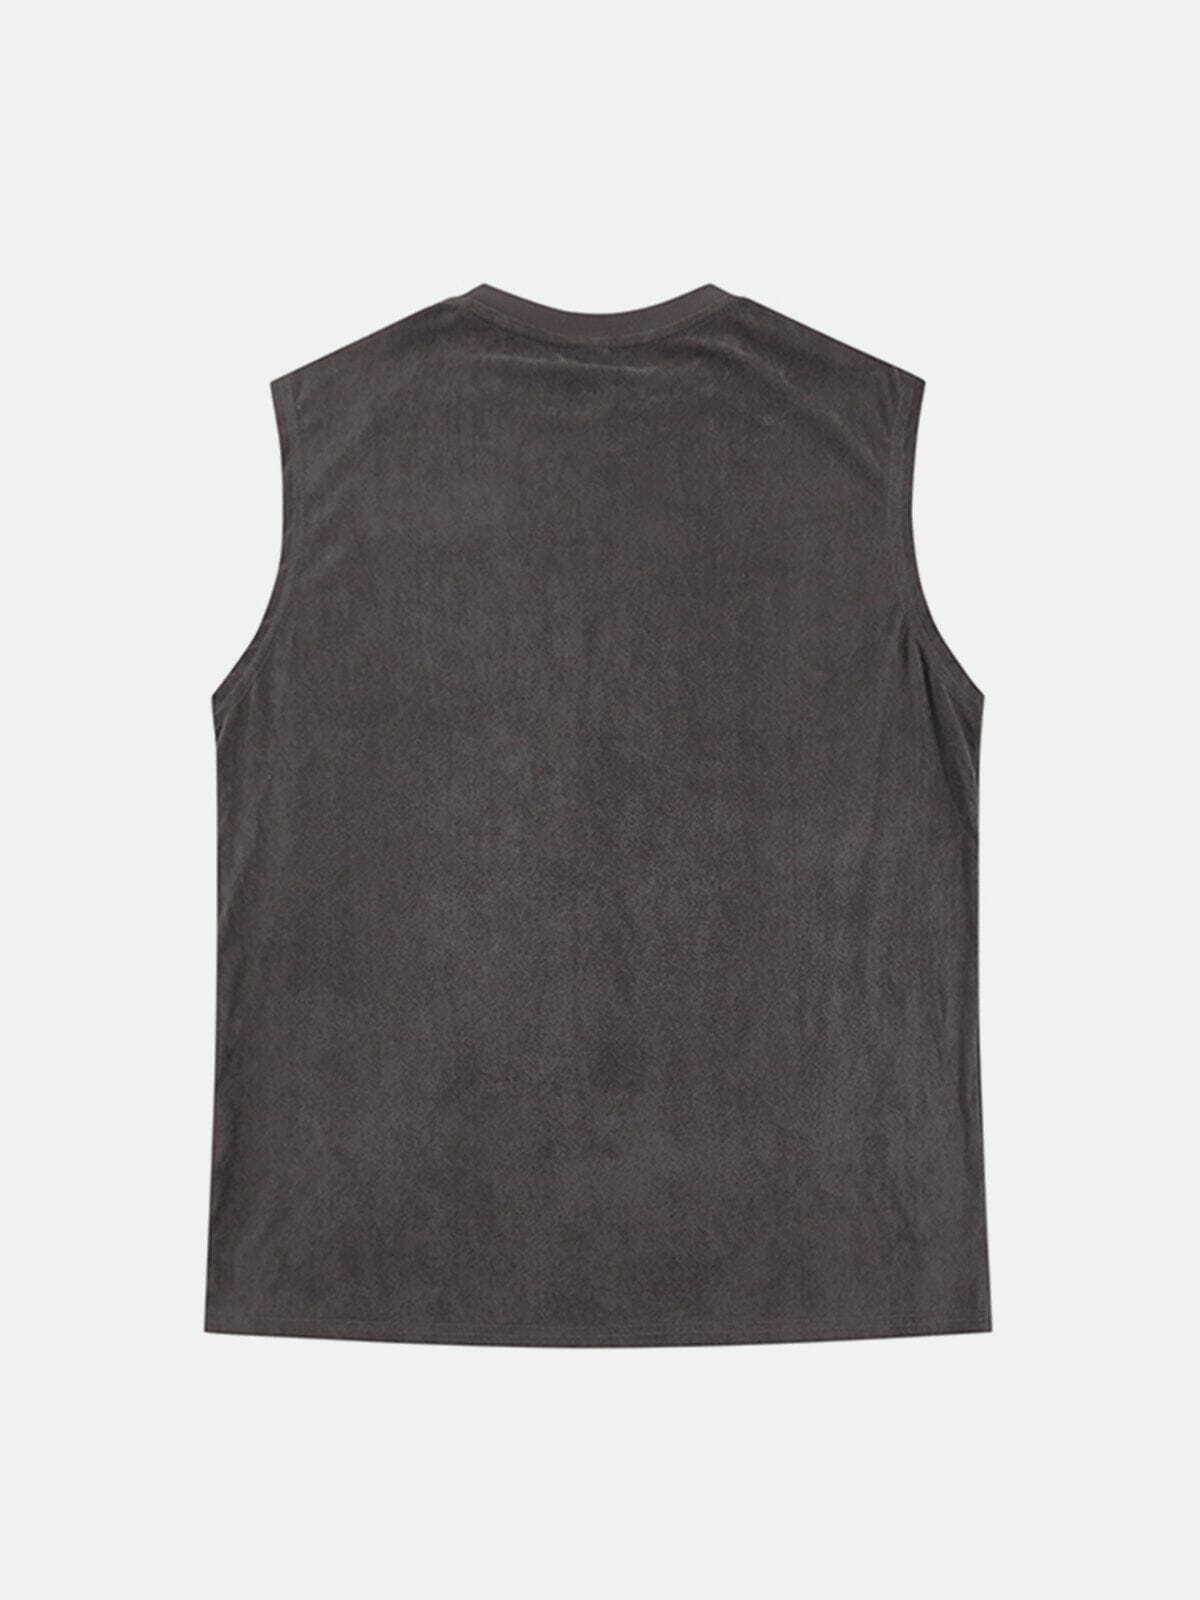 blurring design print vest   edgy streetwear essential 7880